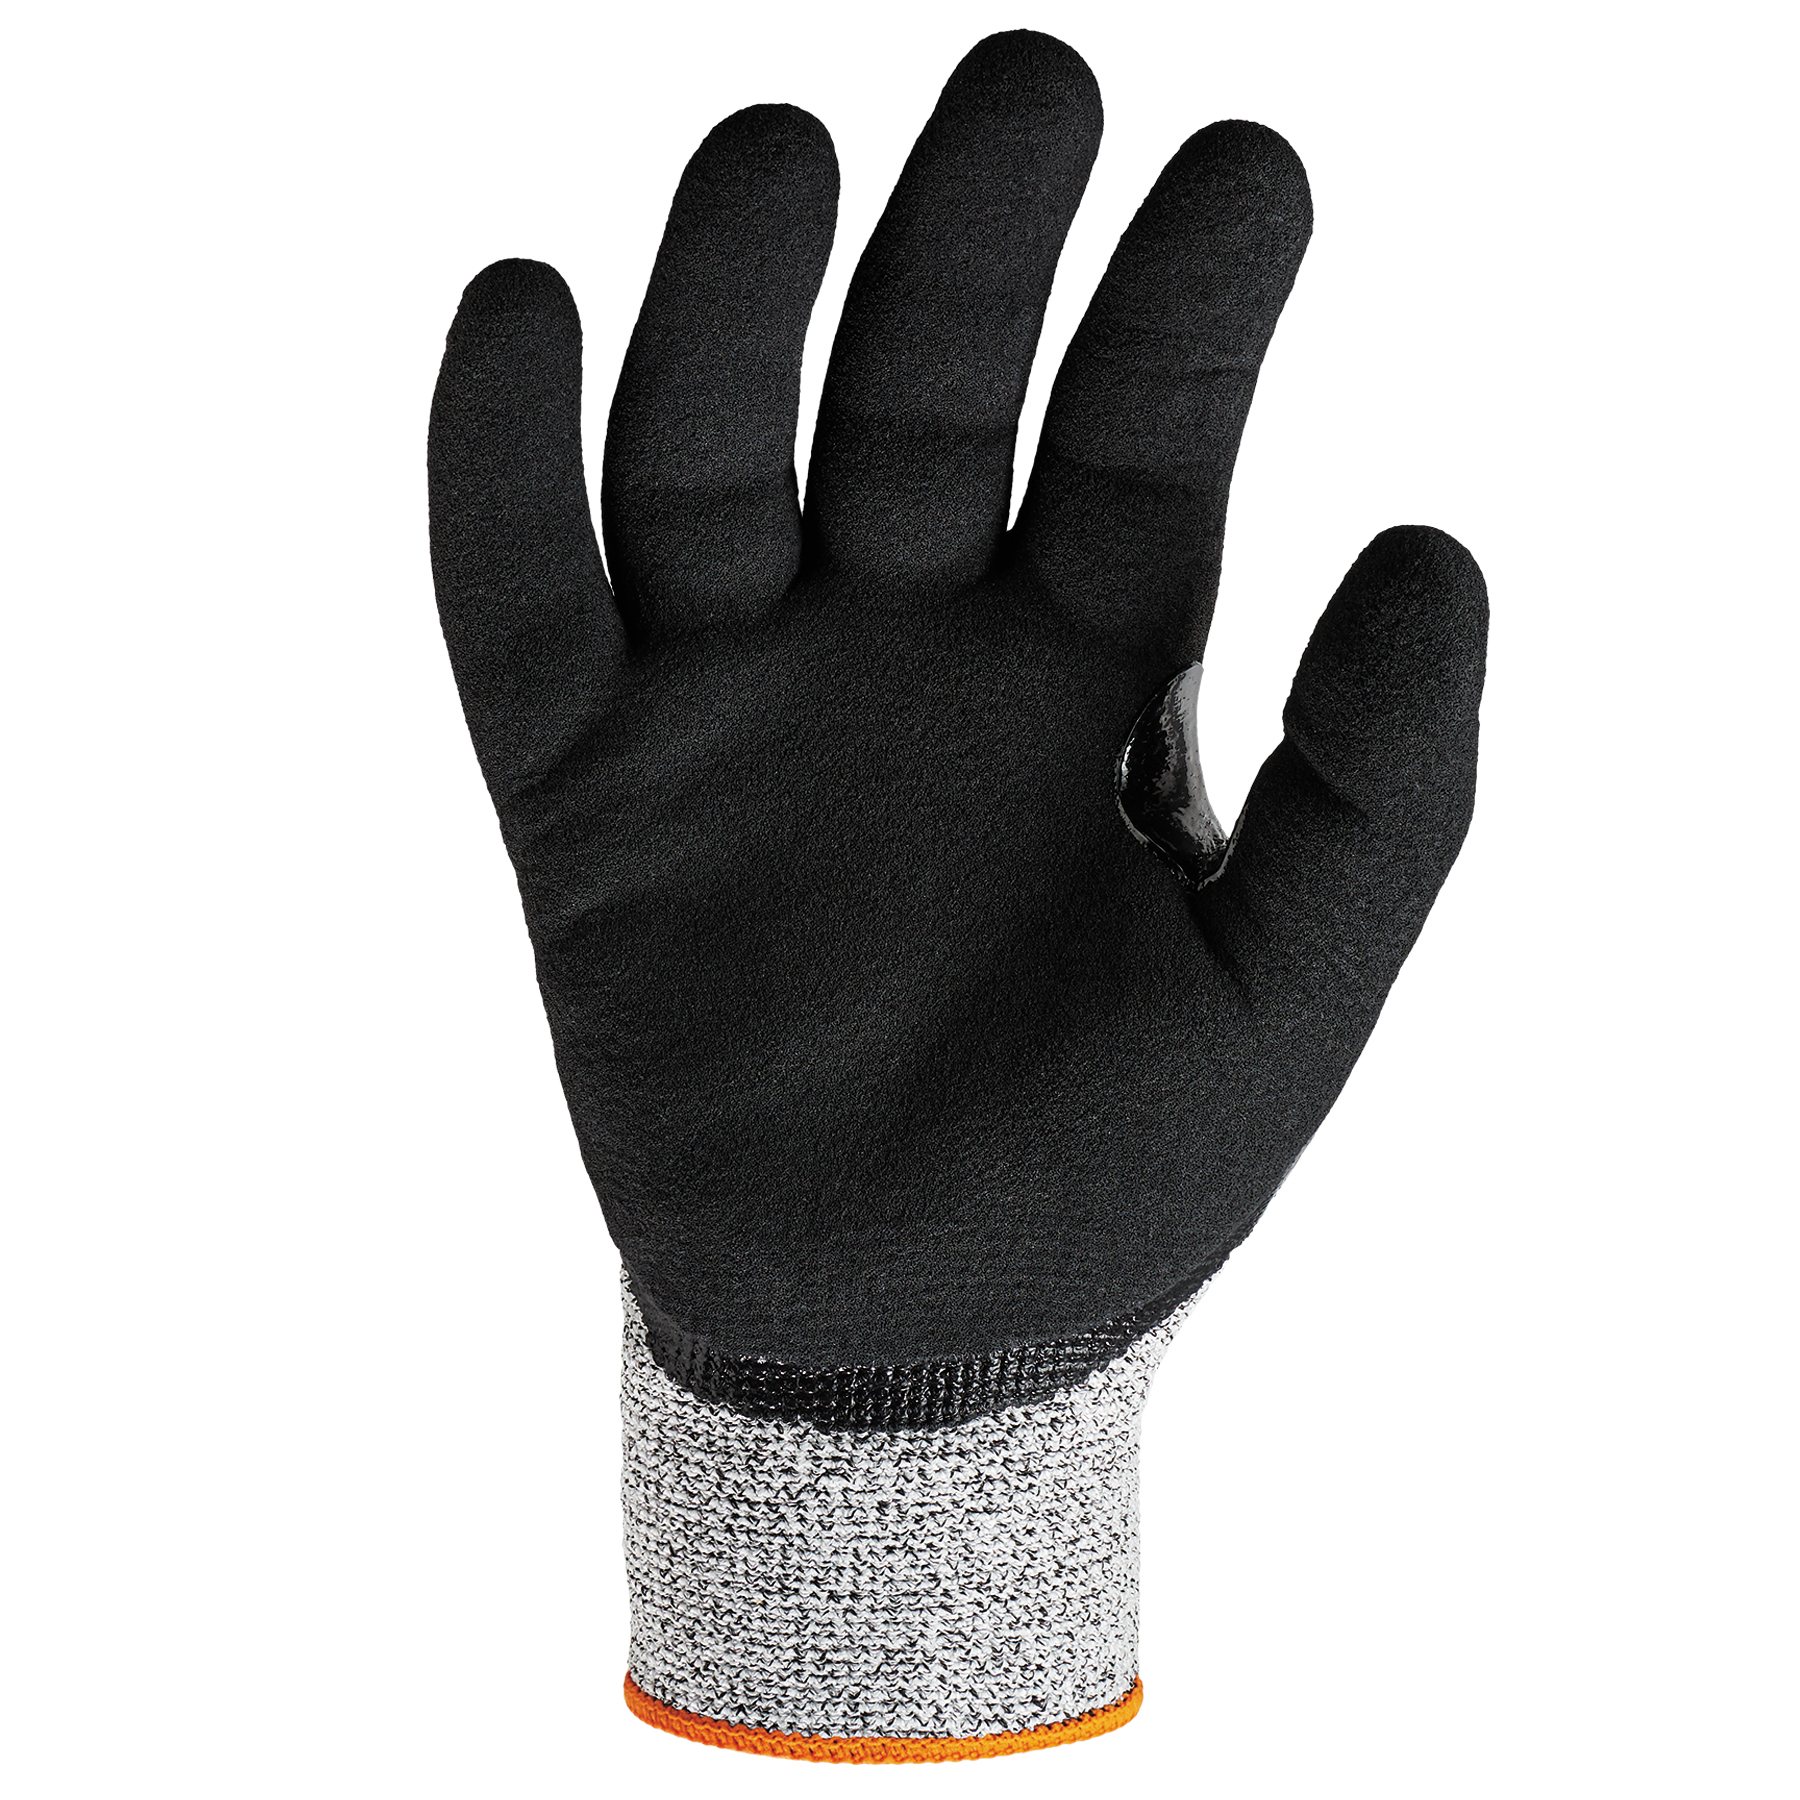 https://www.ergodyne.com/sites/default/files/product-images/17982-7031-nitrile-coated-cut-resistant-gloves-palm_0.jpg